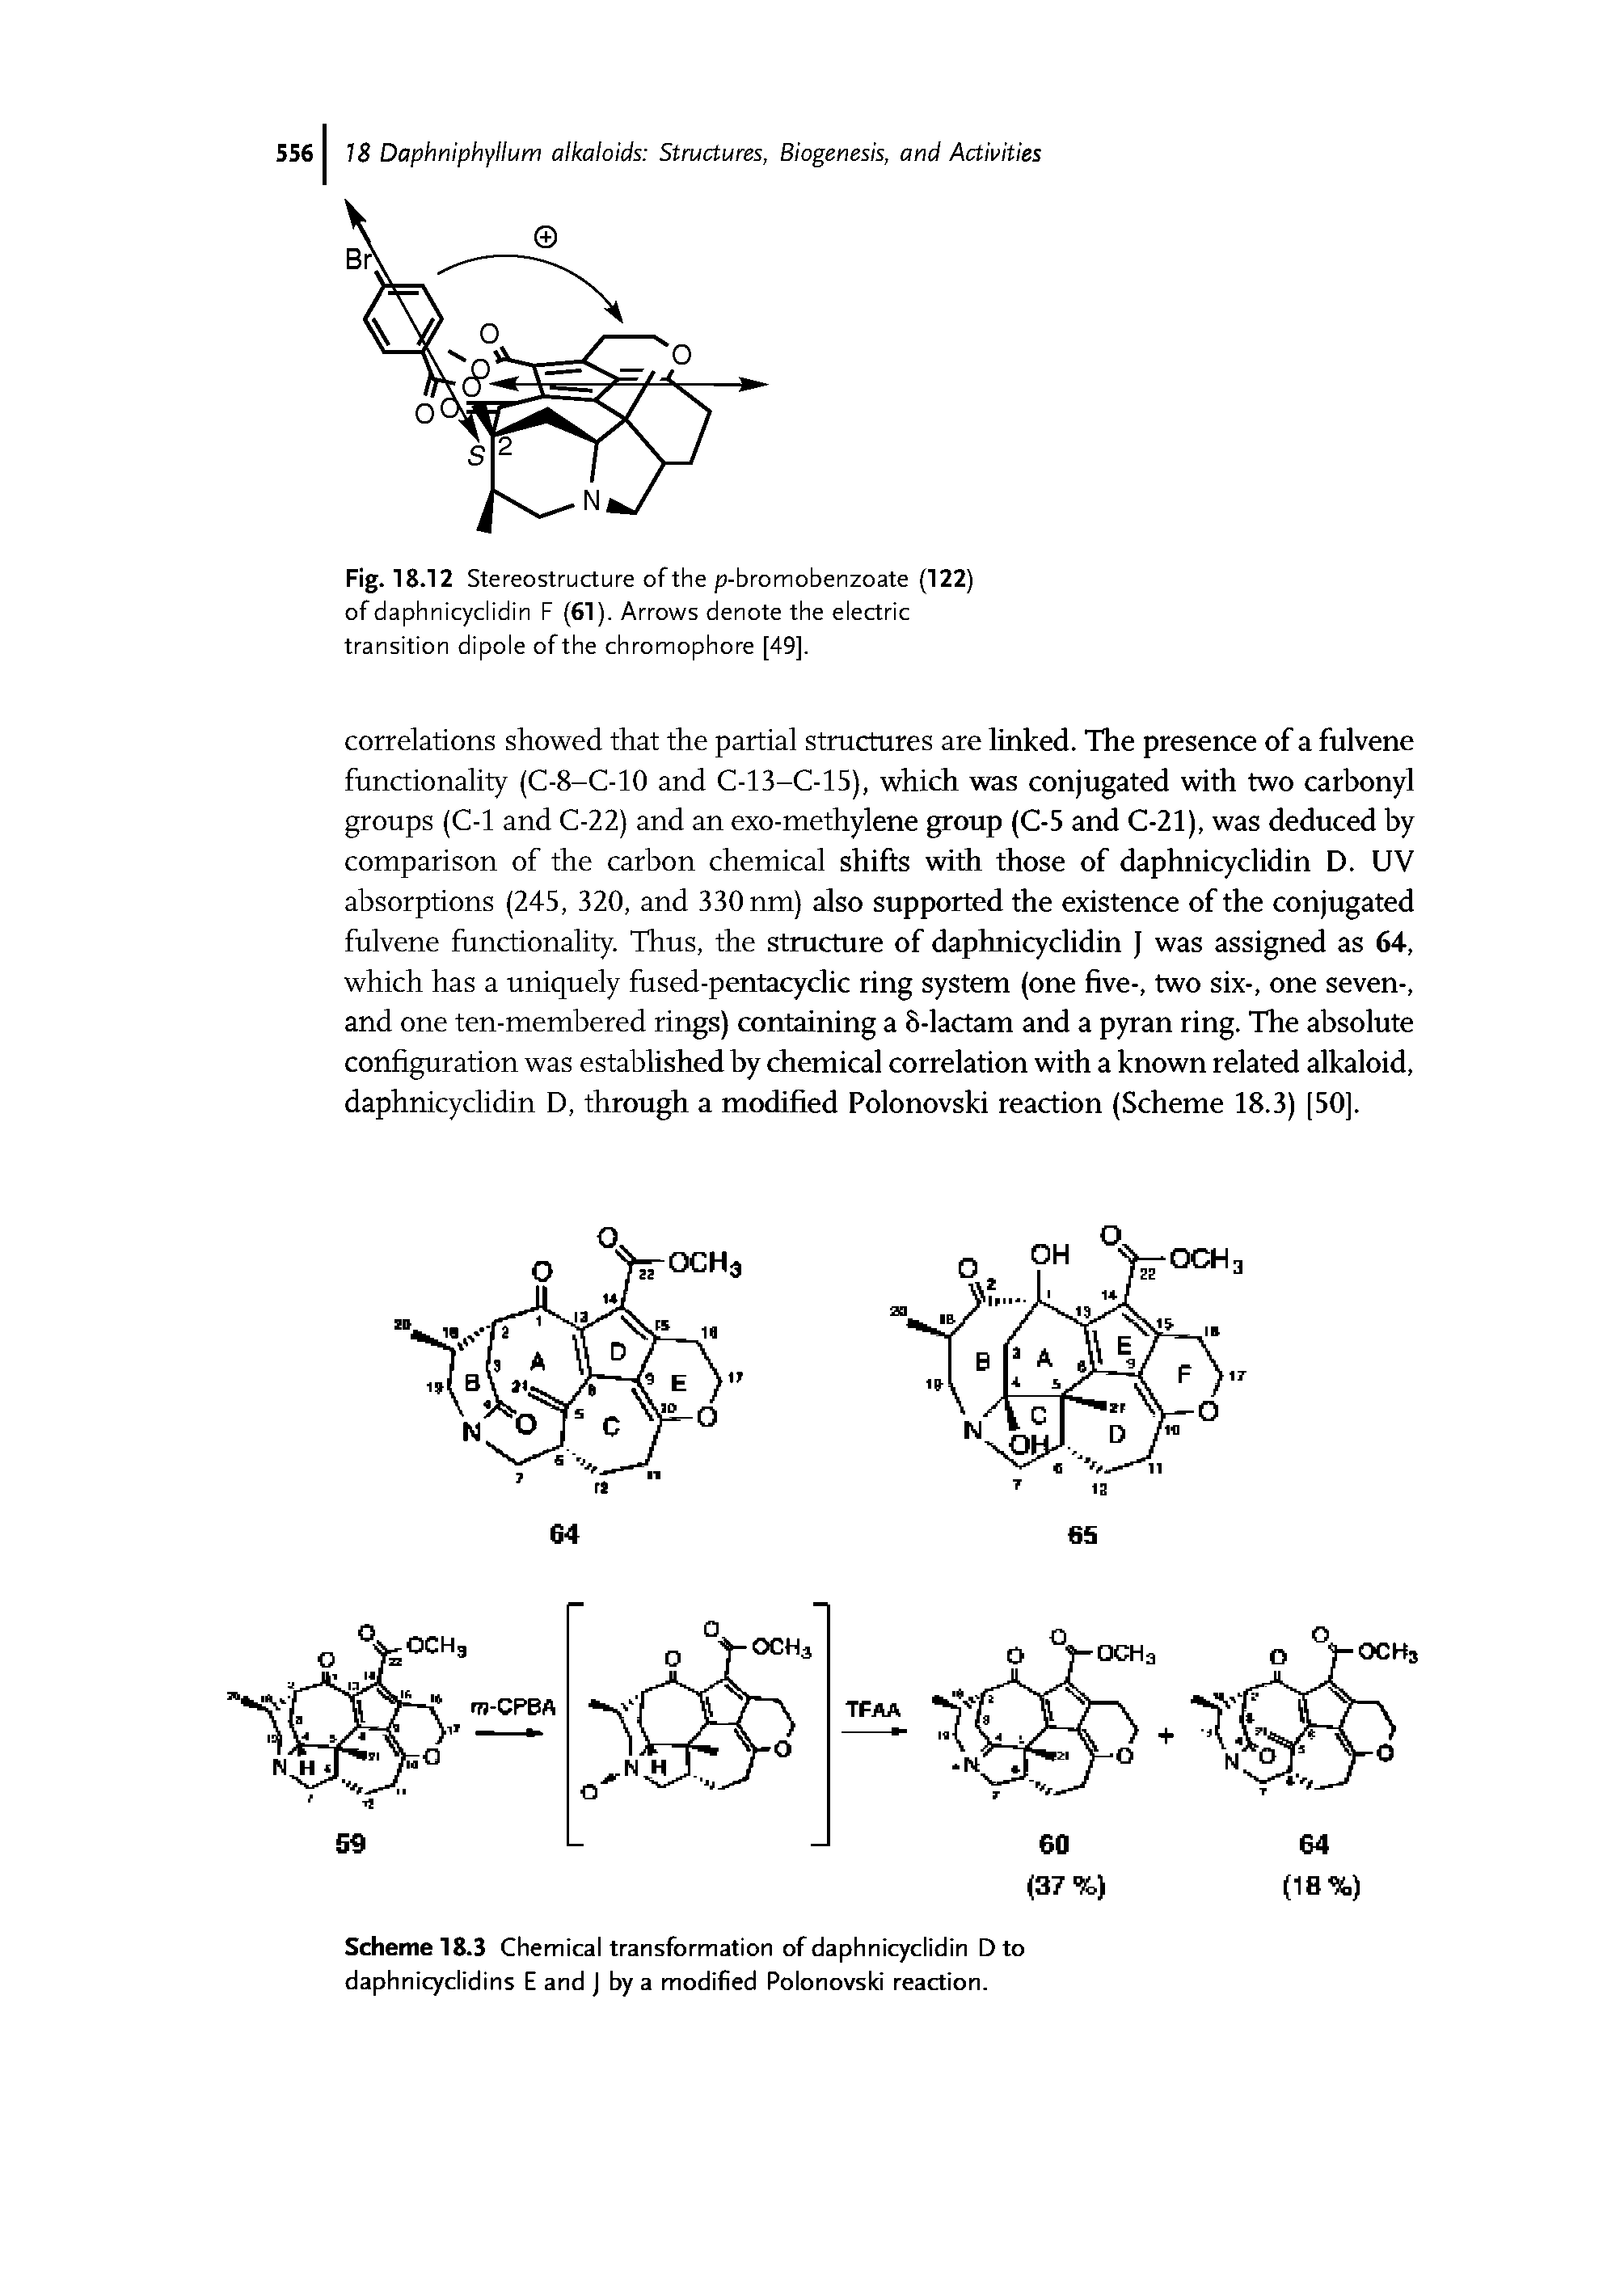 Scheme 18.3 Chemical transformation of daphnicyclidin Dto daphnicyclidins E and J by a modified Polonovski reaction.